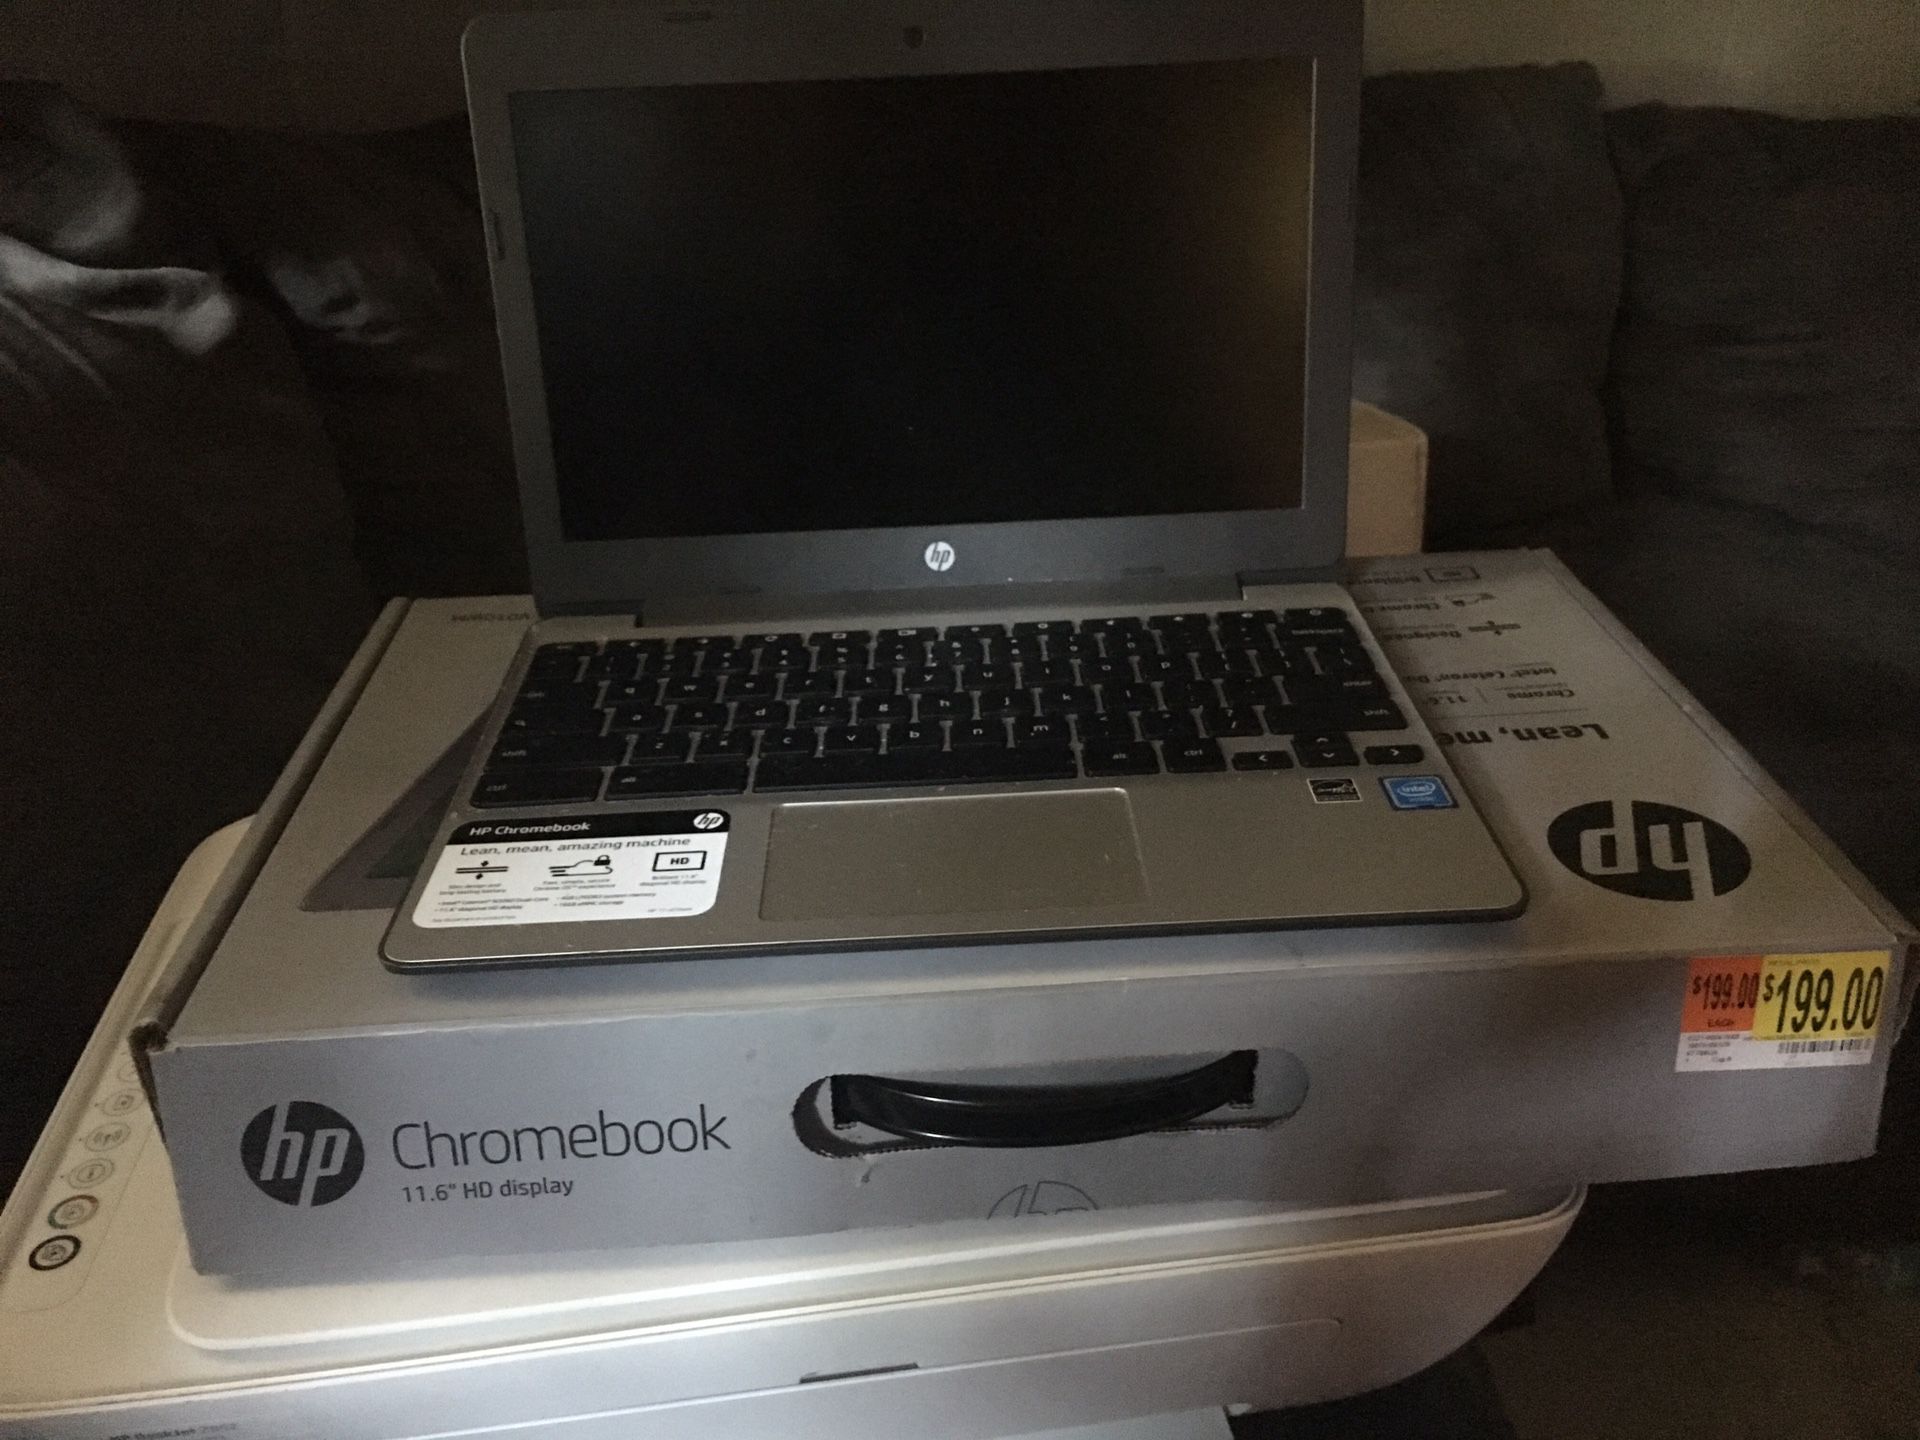 HP Chromebook and HP deskjet printer